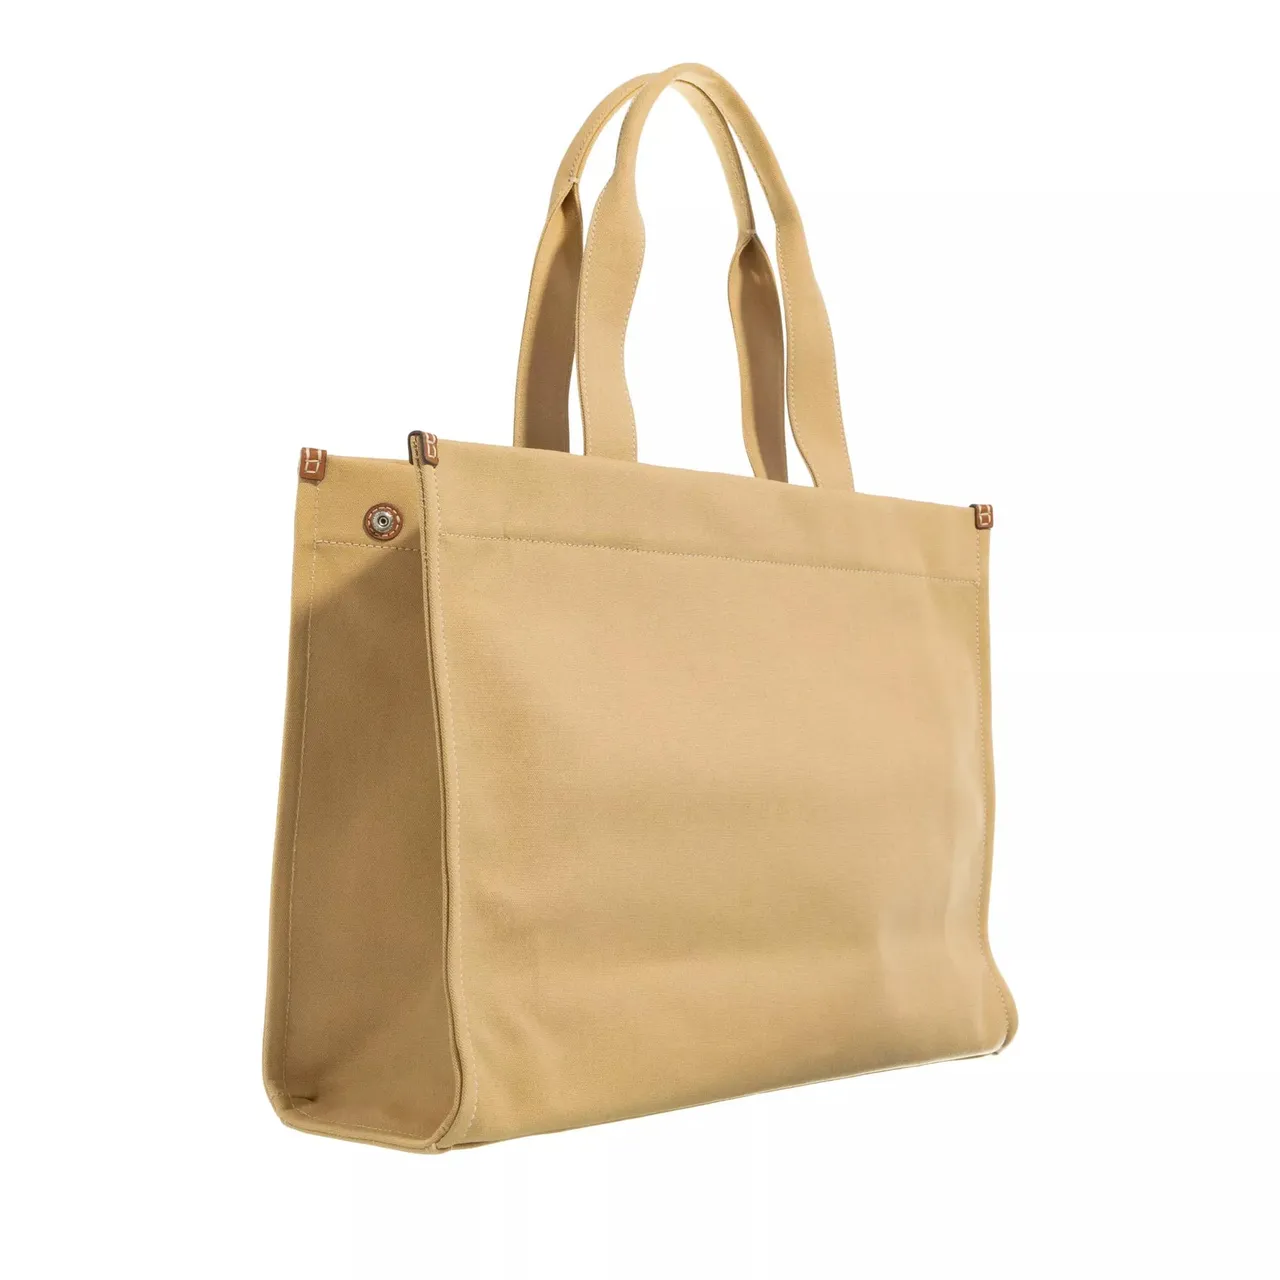 Tory Burch Tote Bags - Ella Canvas Tote - brown - Tote Bags for ladies